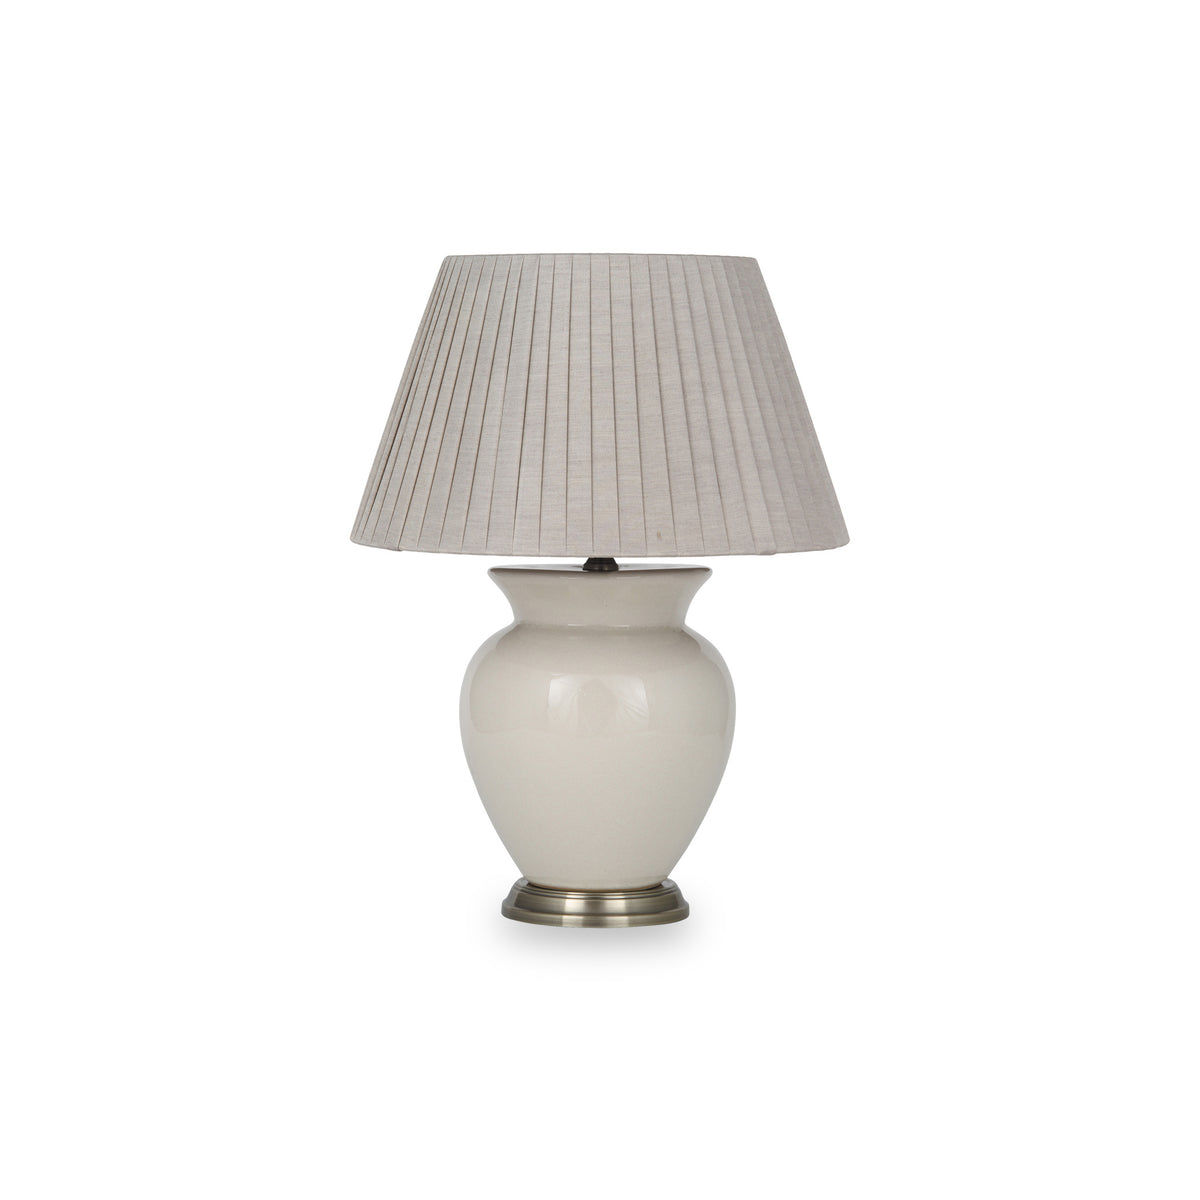 Hadley Cream Ceramic Table Lamp from Roseland Furniture